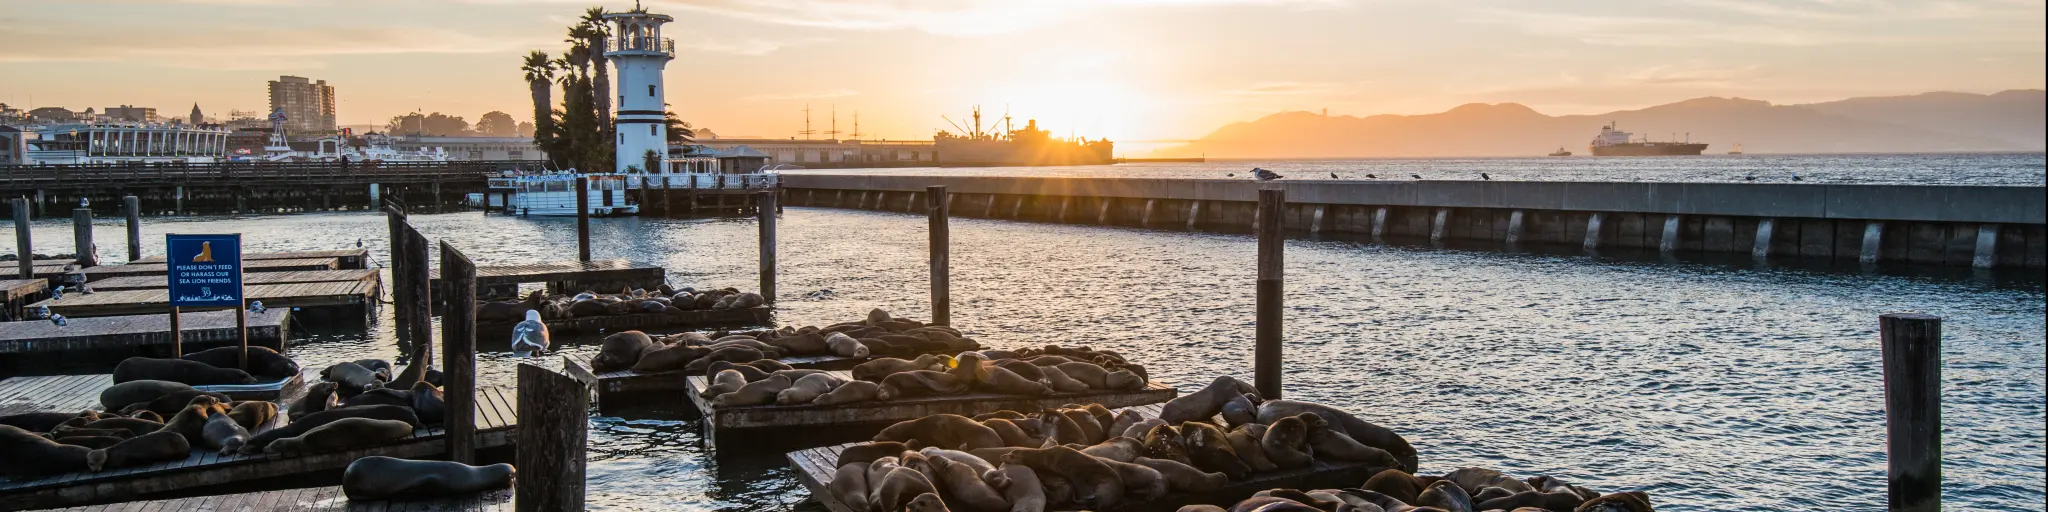 Seals on wooden platforms along Pier 39 in San Francisco at sunset.